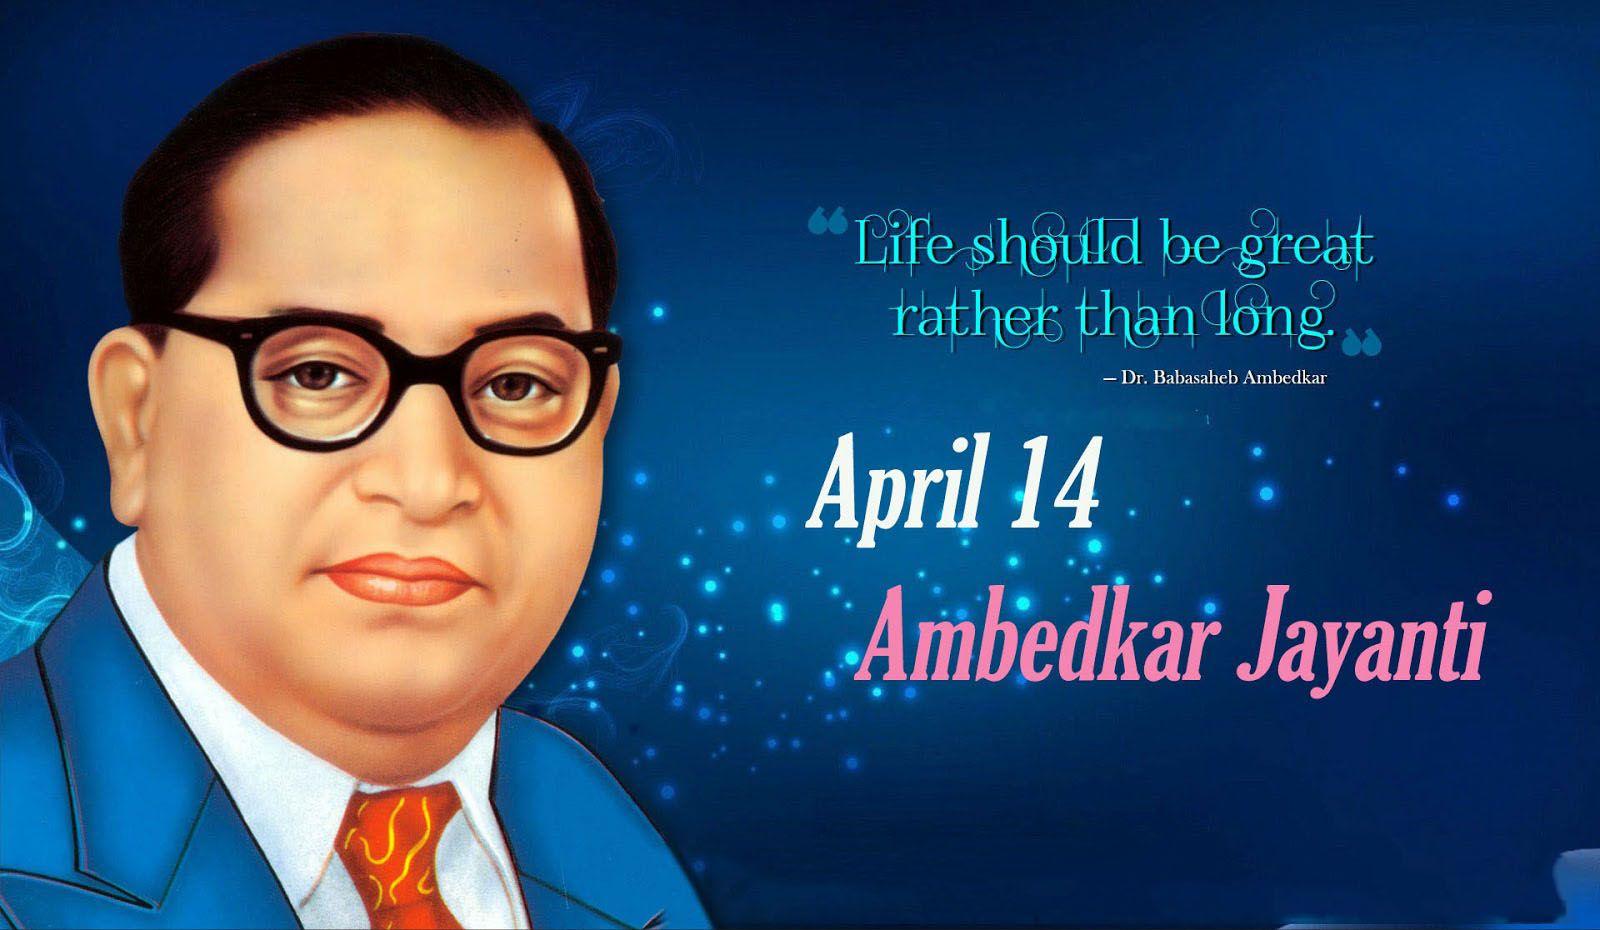 Life should be great rather than long. -Dr. B.R. Ambedkar